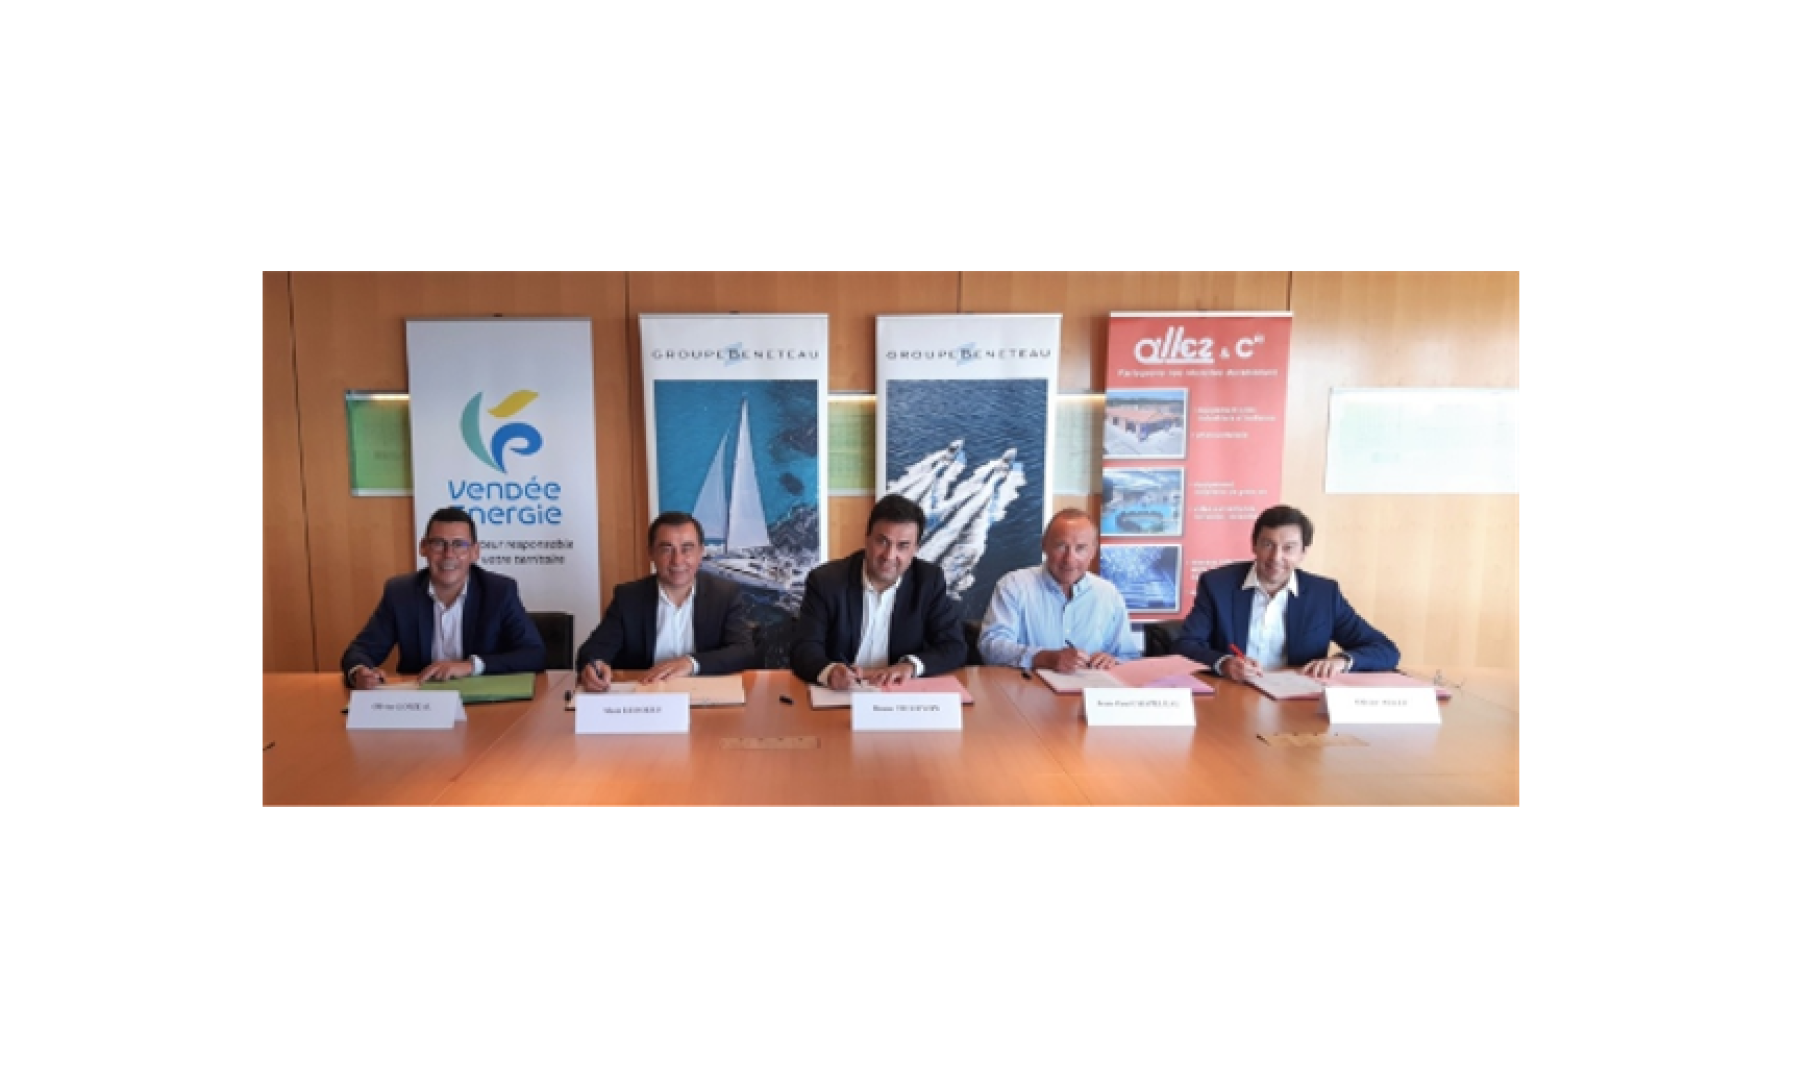 Energy transition: Groupe Beneteau commits itself alongside Vendée Energie and ALLEZ Cie group